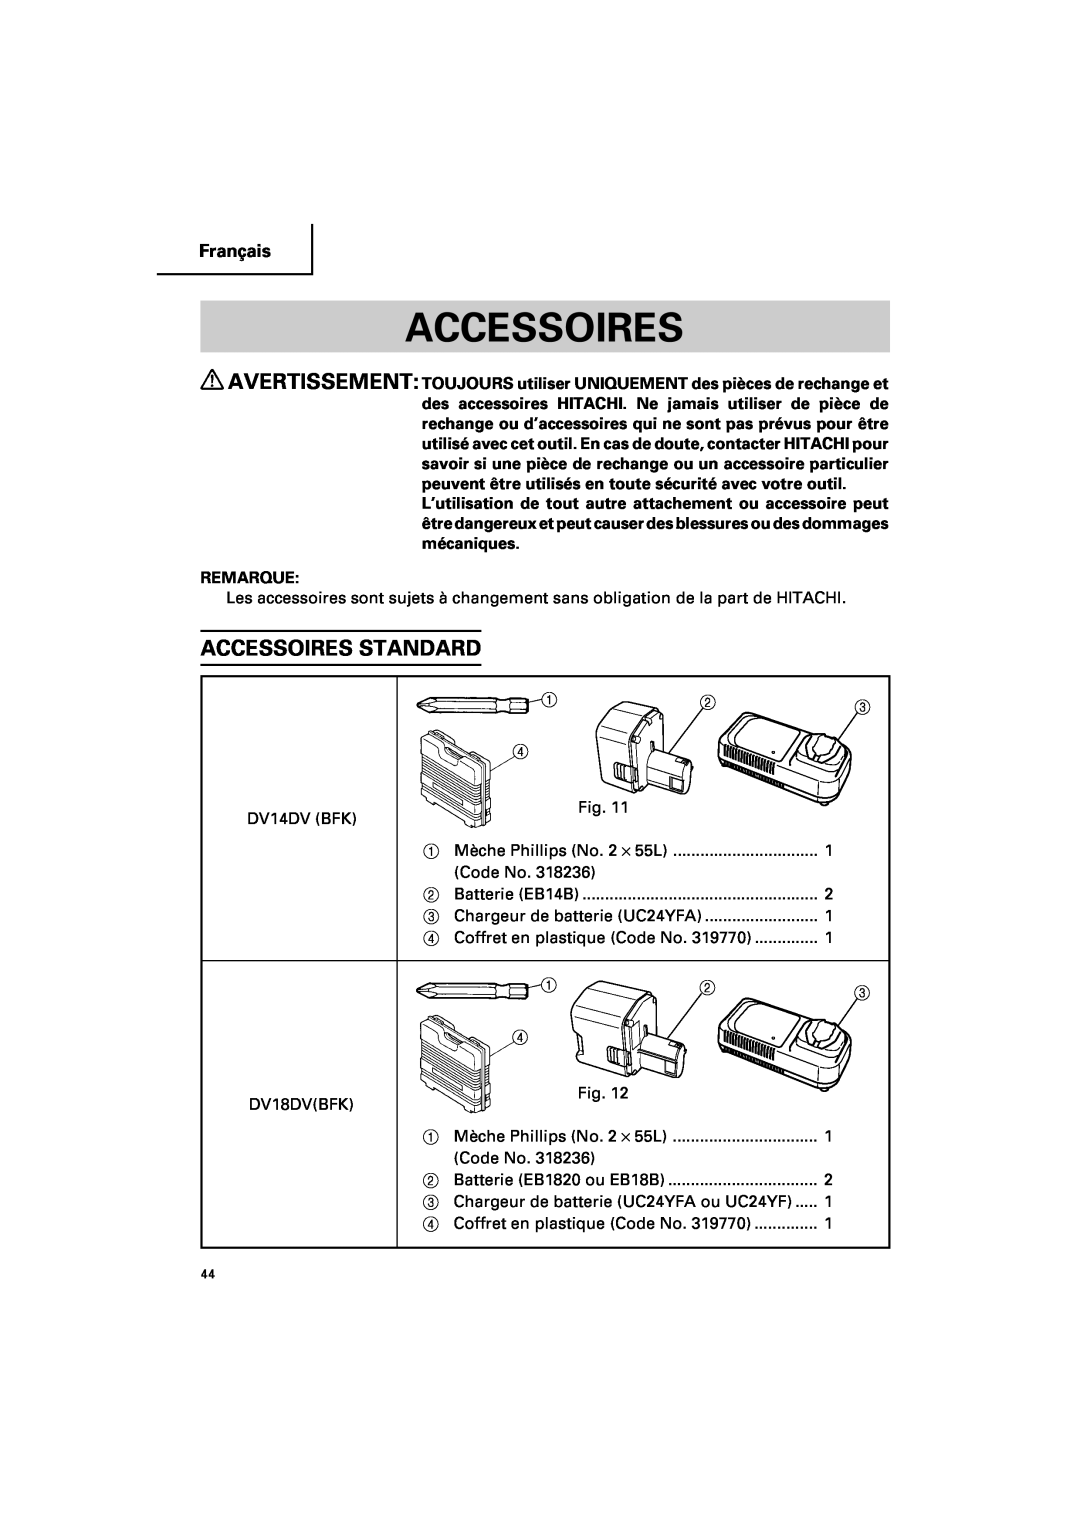 Hitachi DV 18DV, DV 14DV instruction manual Accessoires Standard, Français 